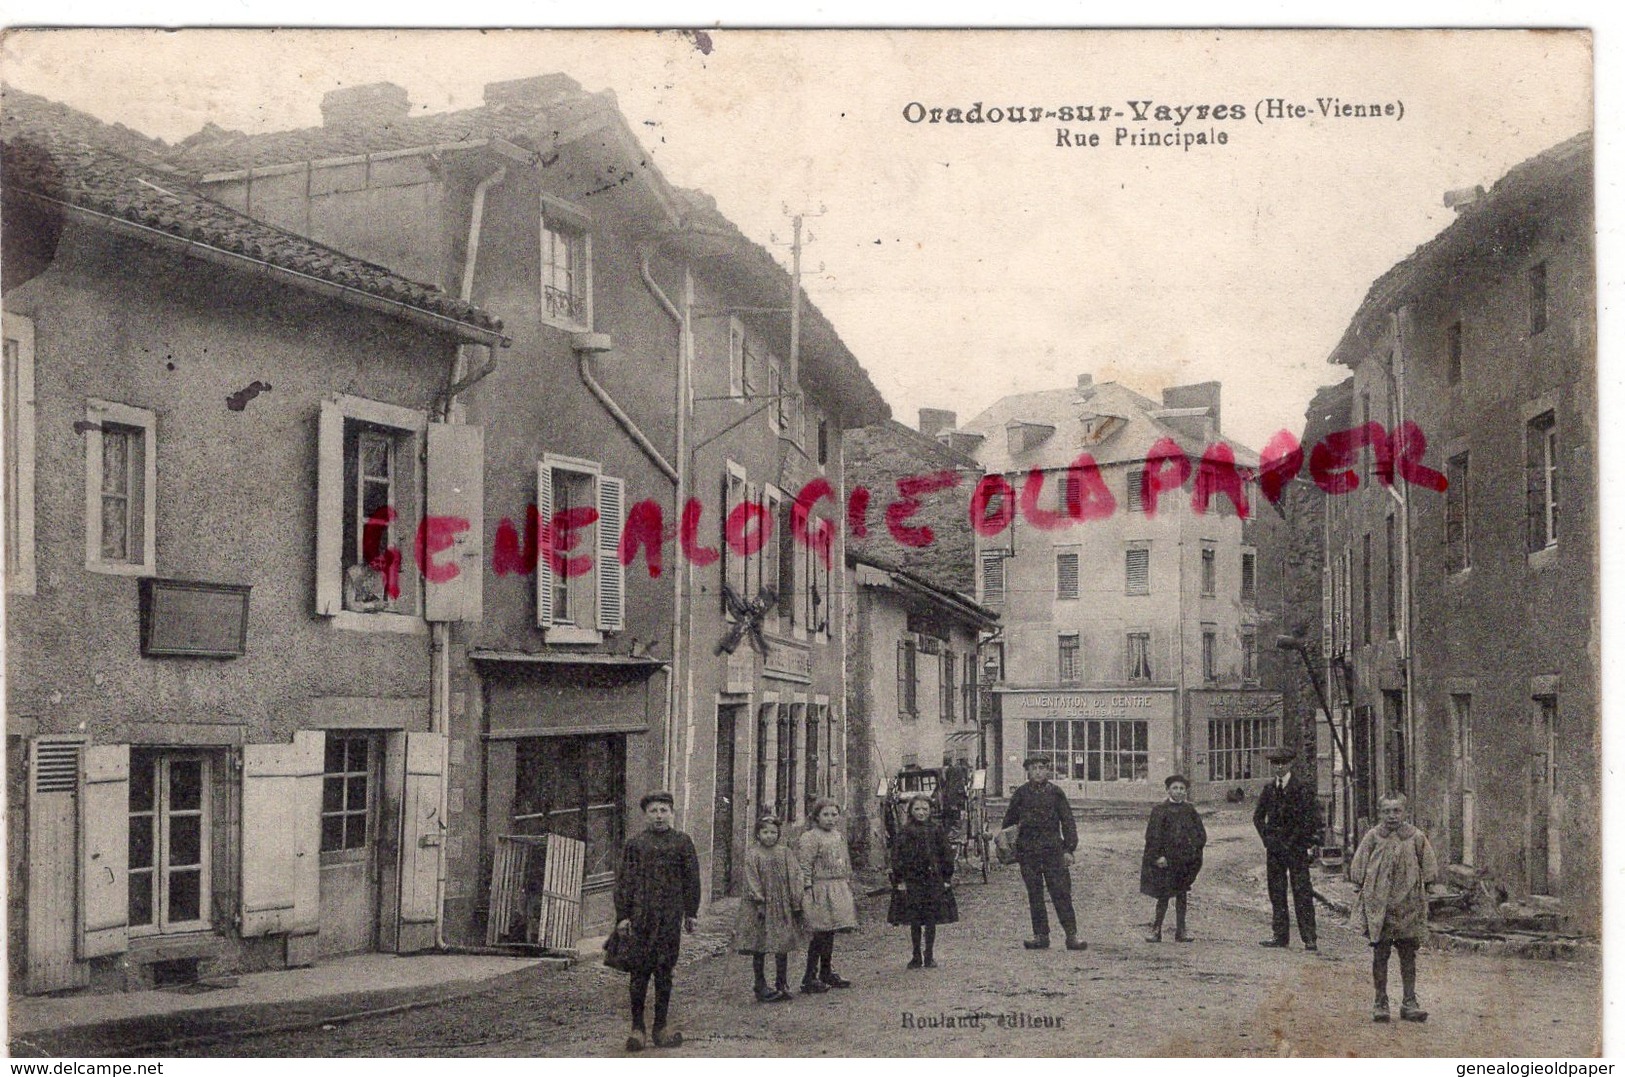 87 - ORADOUR SUR VAYRES- RUE PRINCIPALE - EDITEUR ROULAUD 1914 - HAUTE VIENNE - Oradour Sur Vayres